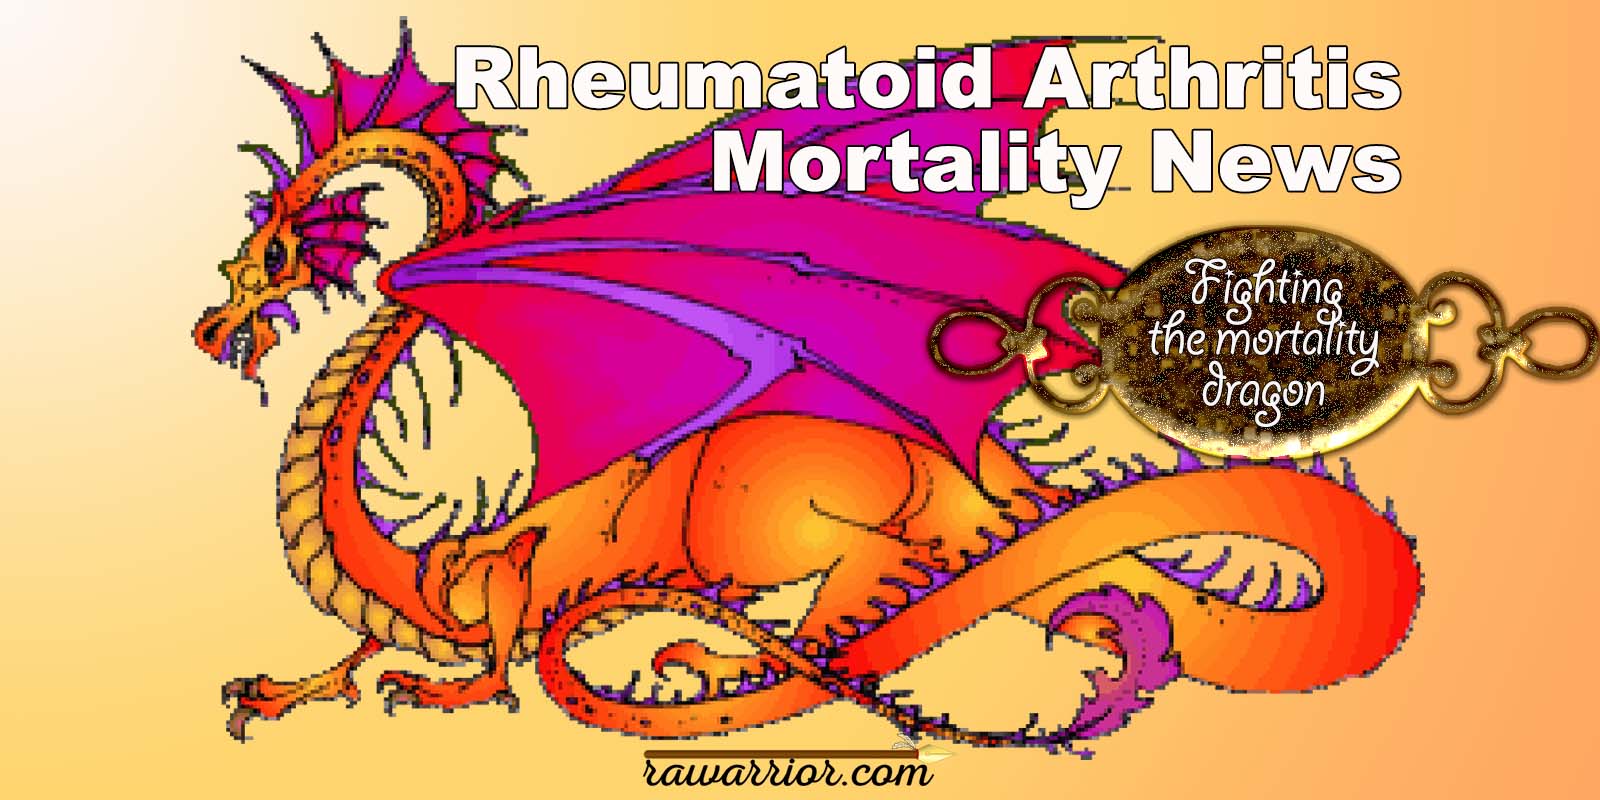 rheumatoid arthritis mortality news